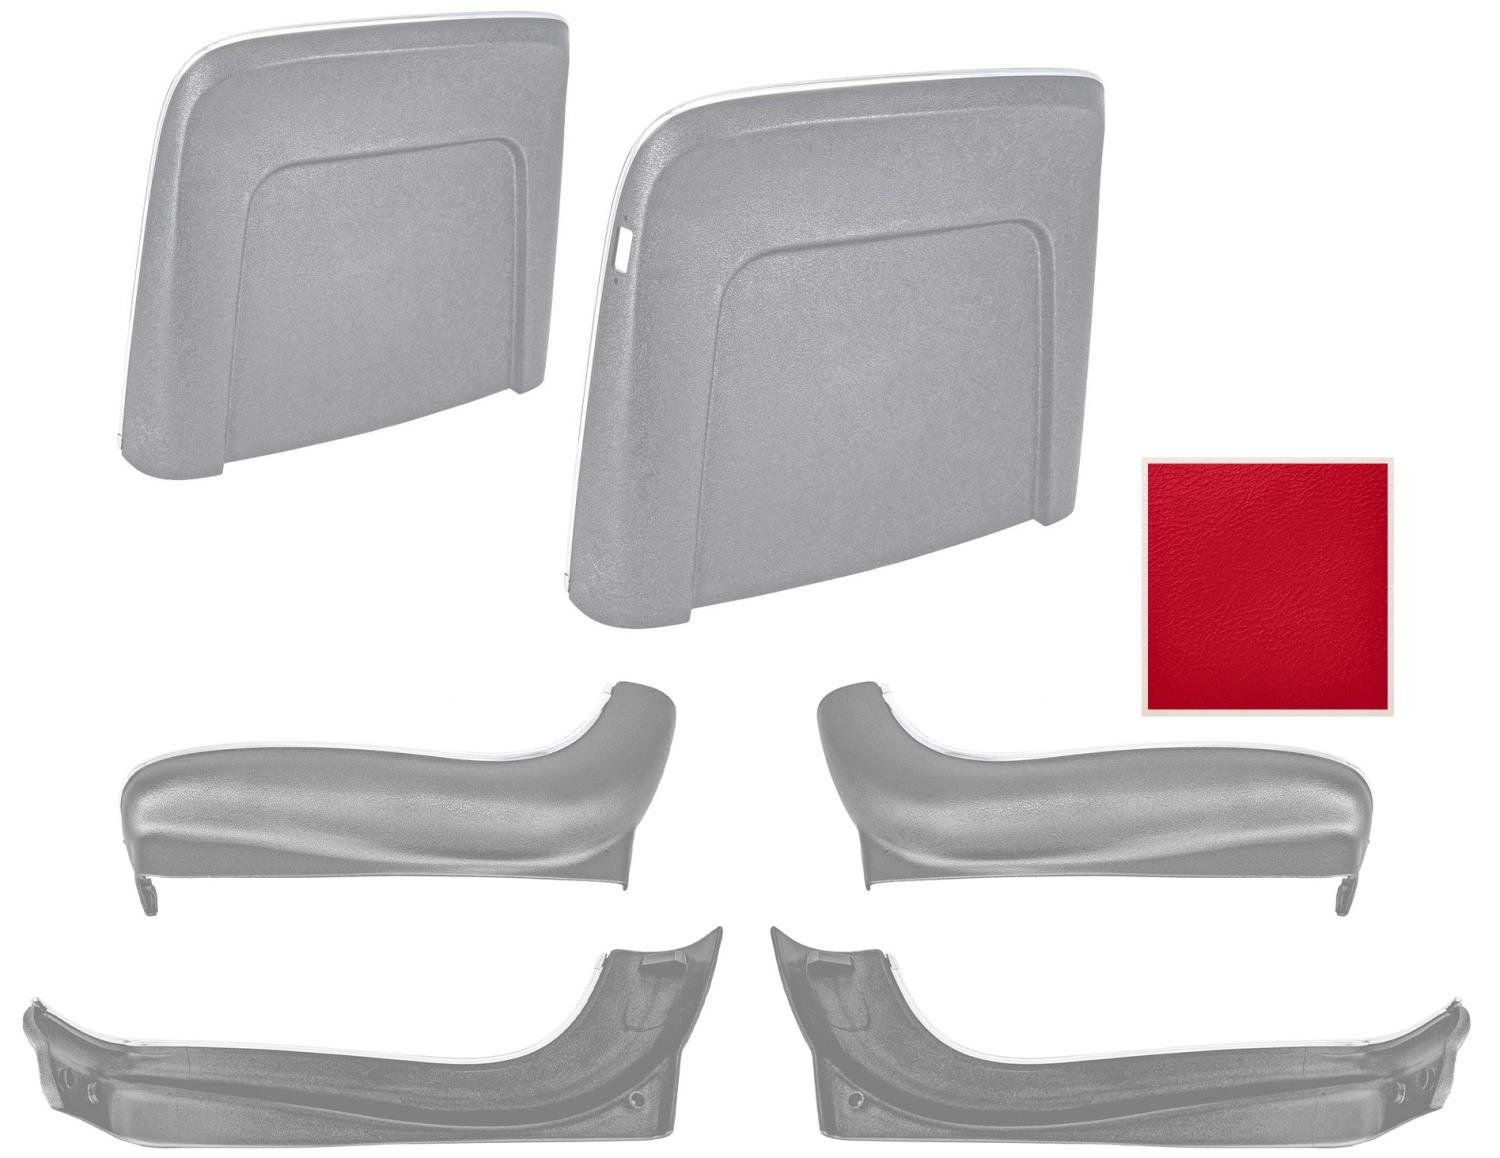 Seat Backs & Sides Kit Fits Select 1967 GM Models [Red]